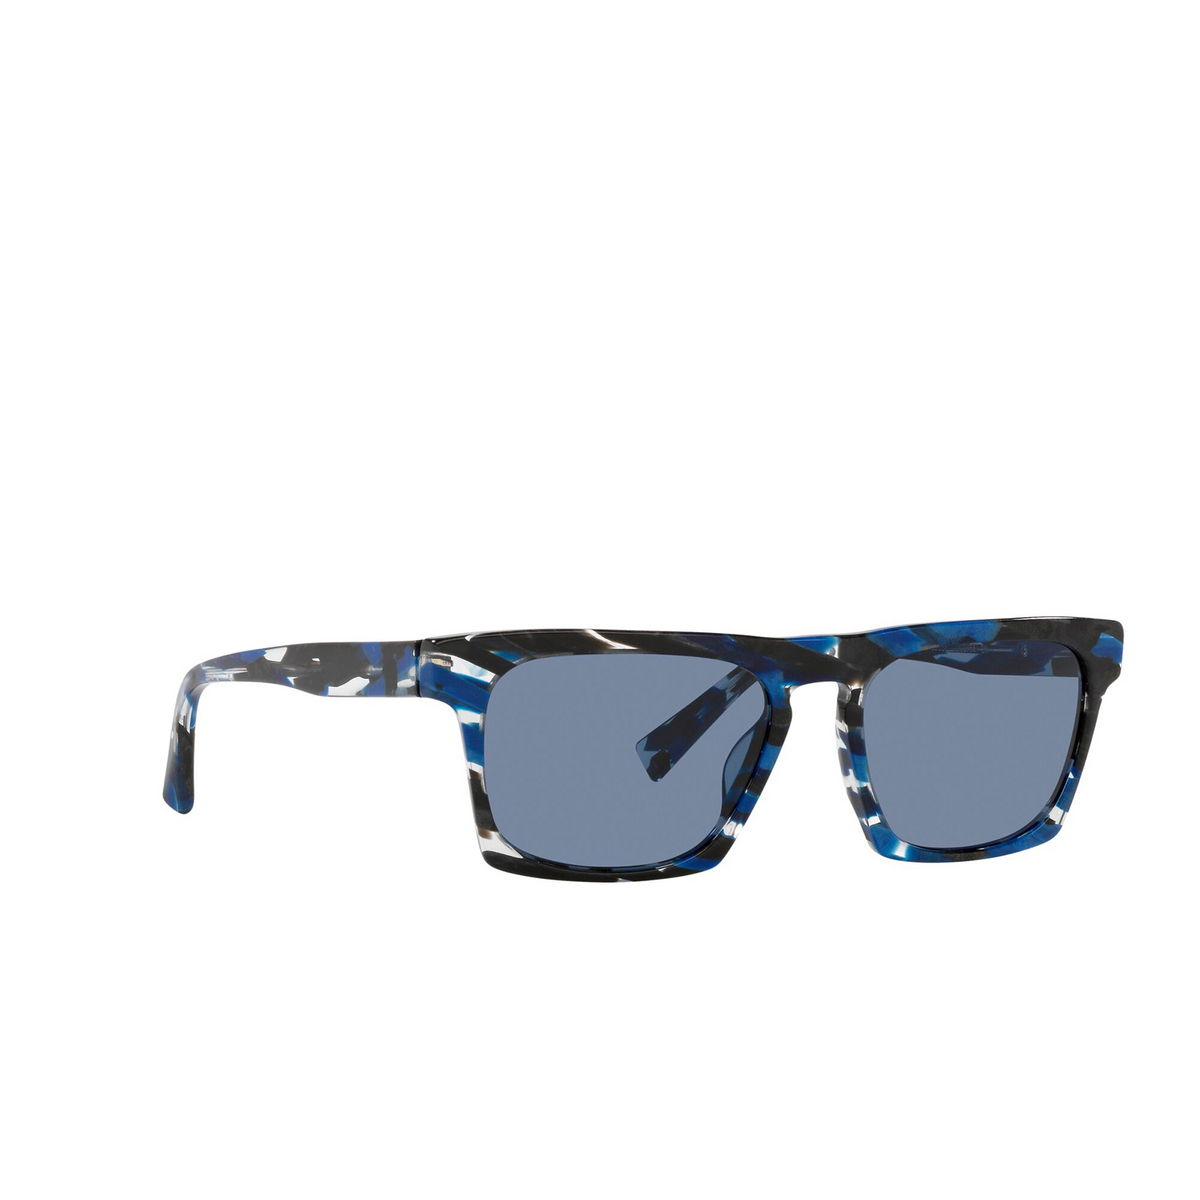 Alain Mikli® Square Sunglasses: N°861 Sun A05065 color Havana Blue Black 003/55 - three-quarters view.